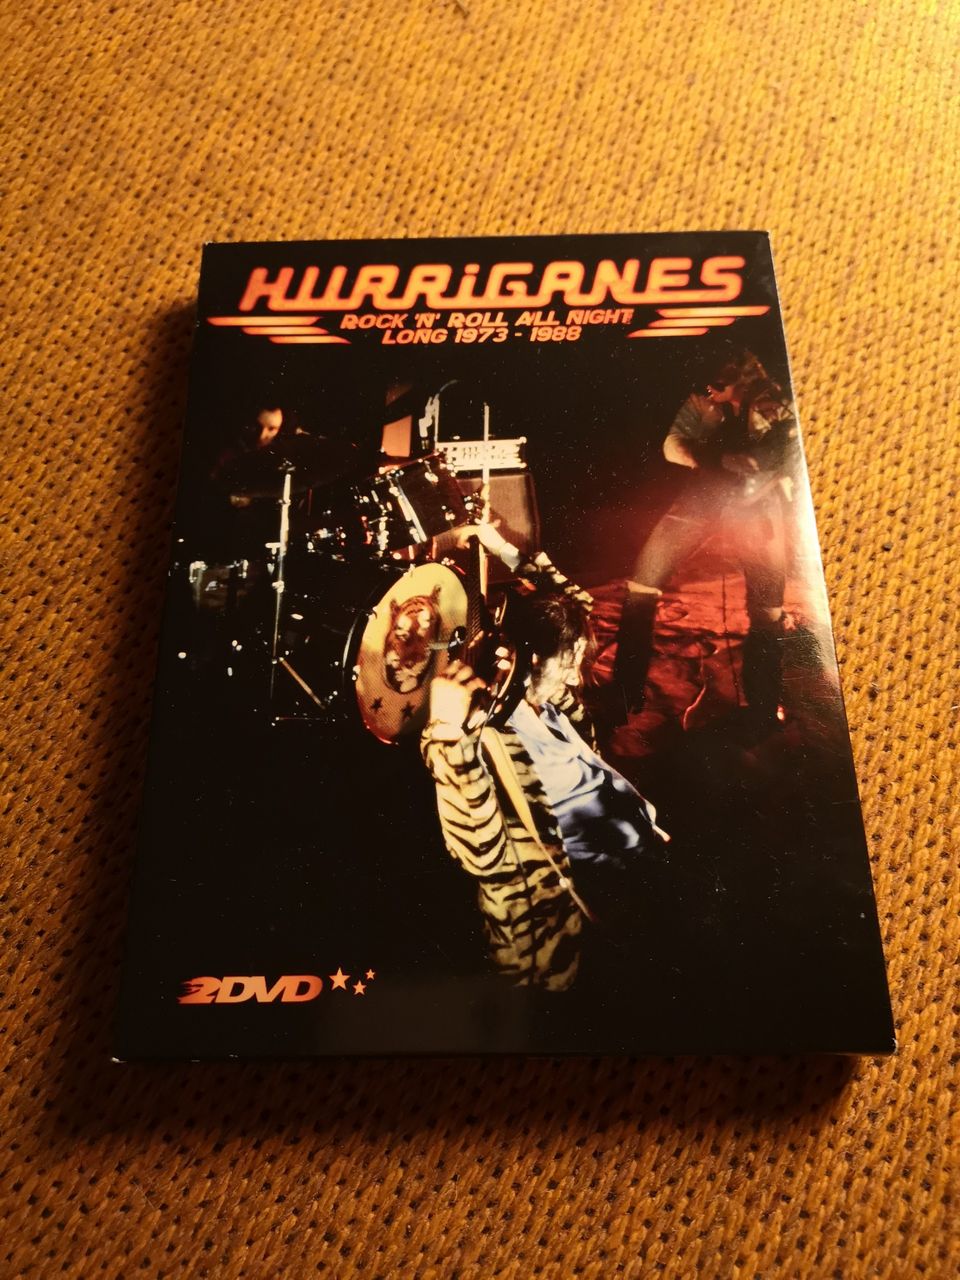 Hurriganes - Rock 'n' Roll All Night Long 1973 - 1988 2DVD